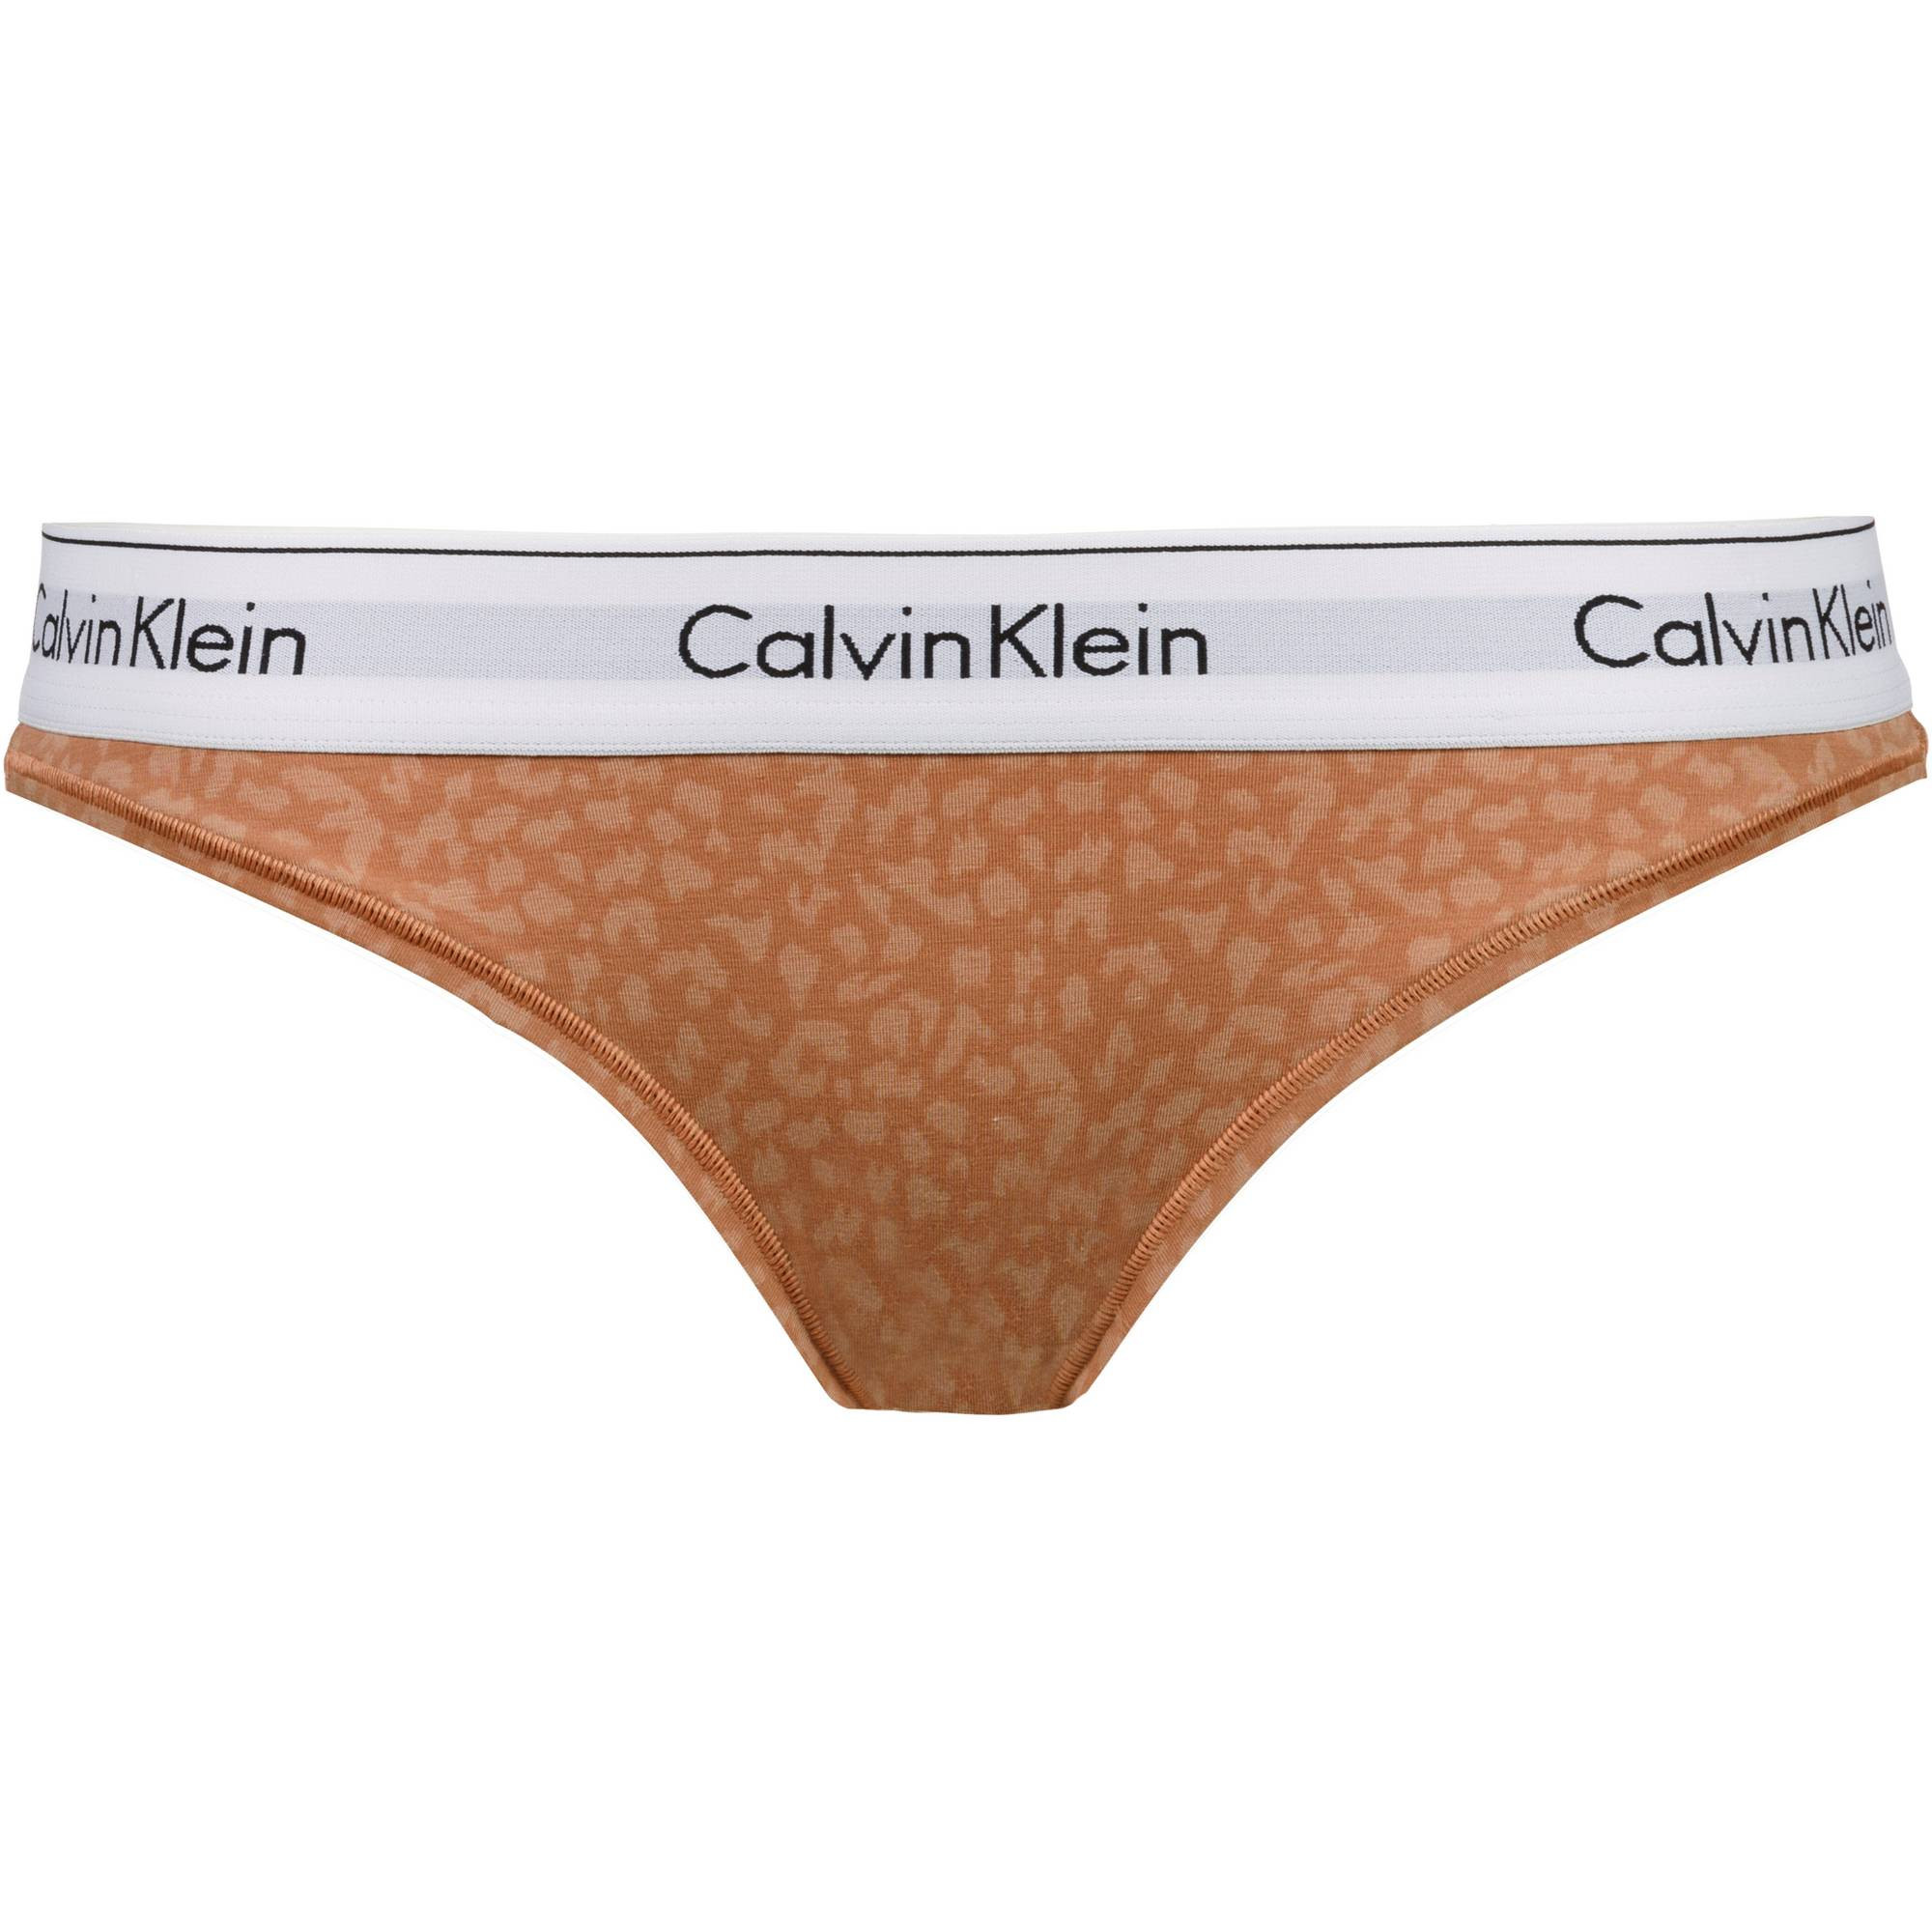 Dámské kalhotky model 17835580 - Calvin Klein Velikost: S, Barvy: hnědá/vzor